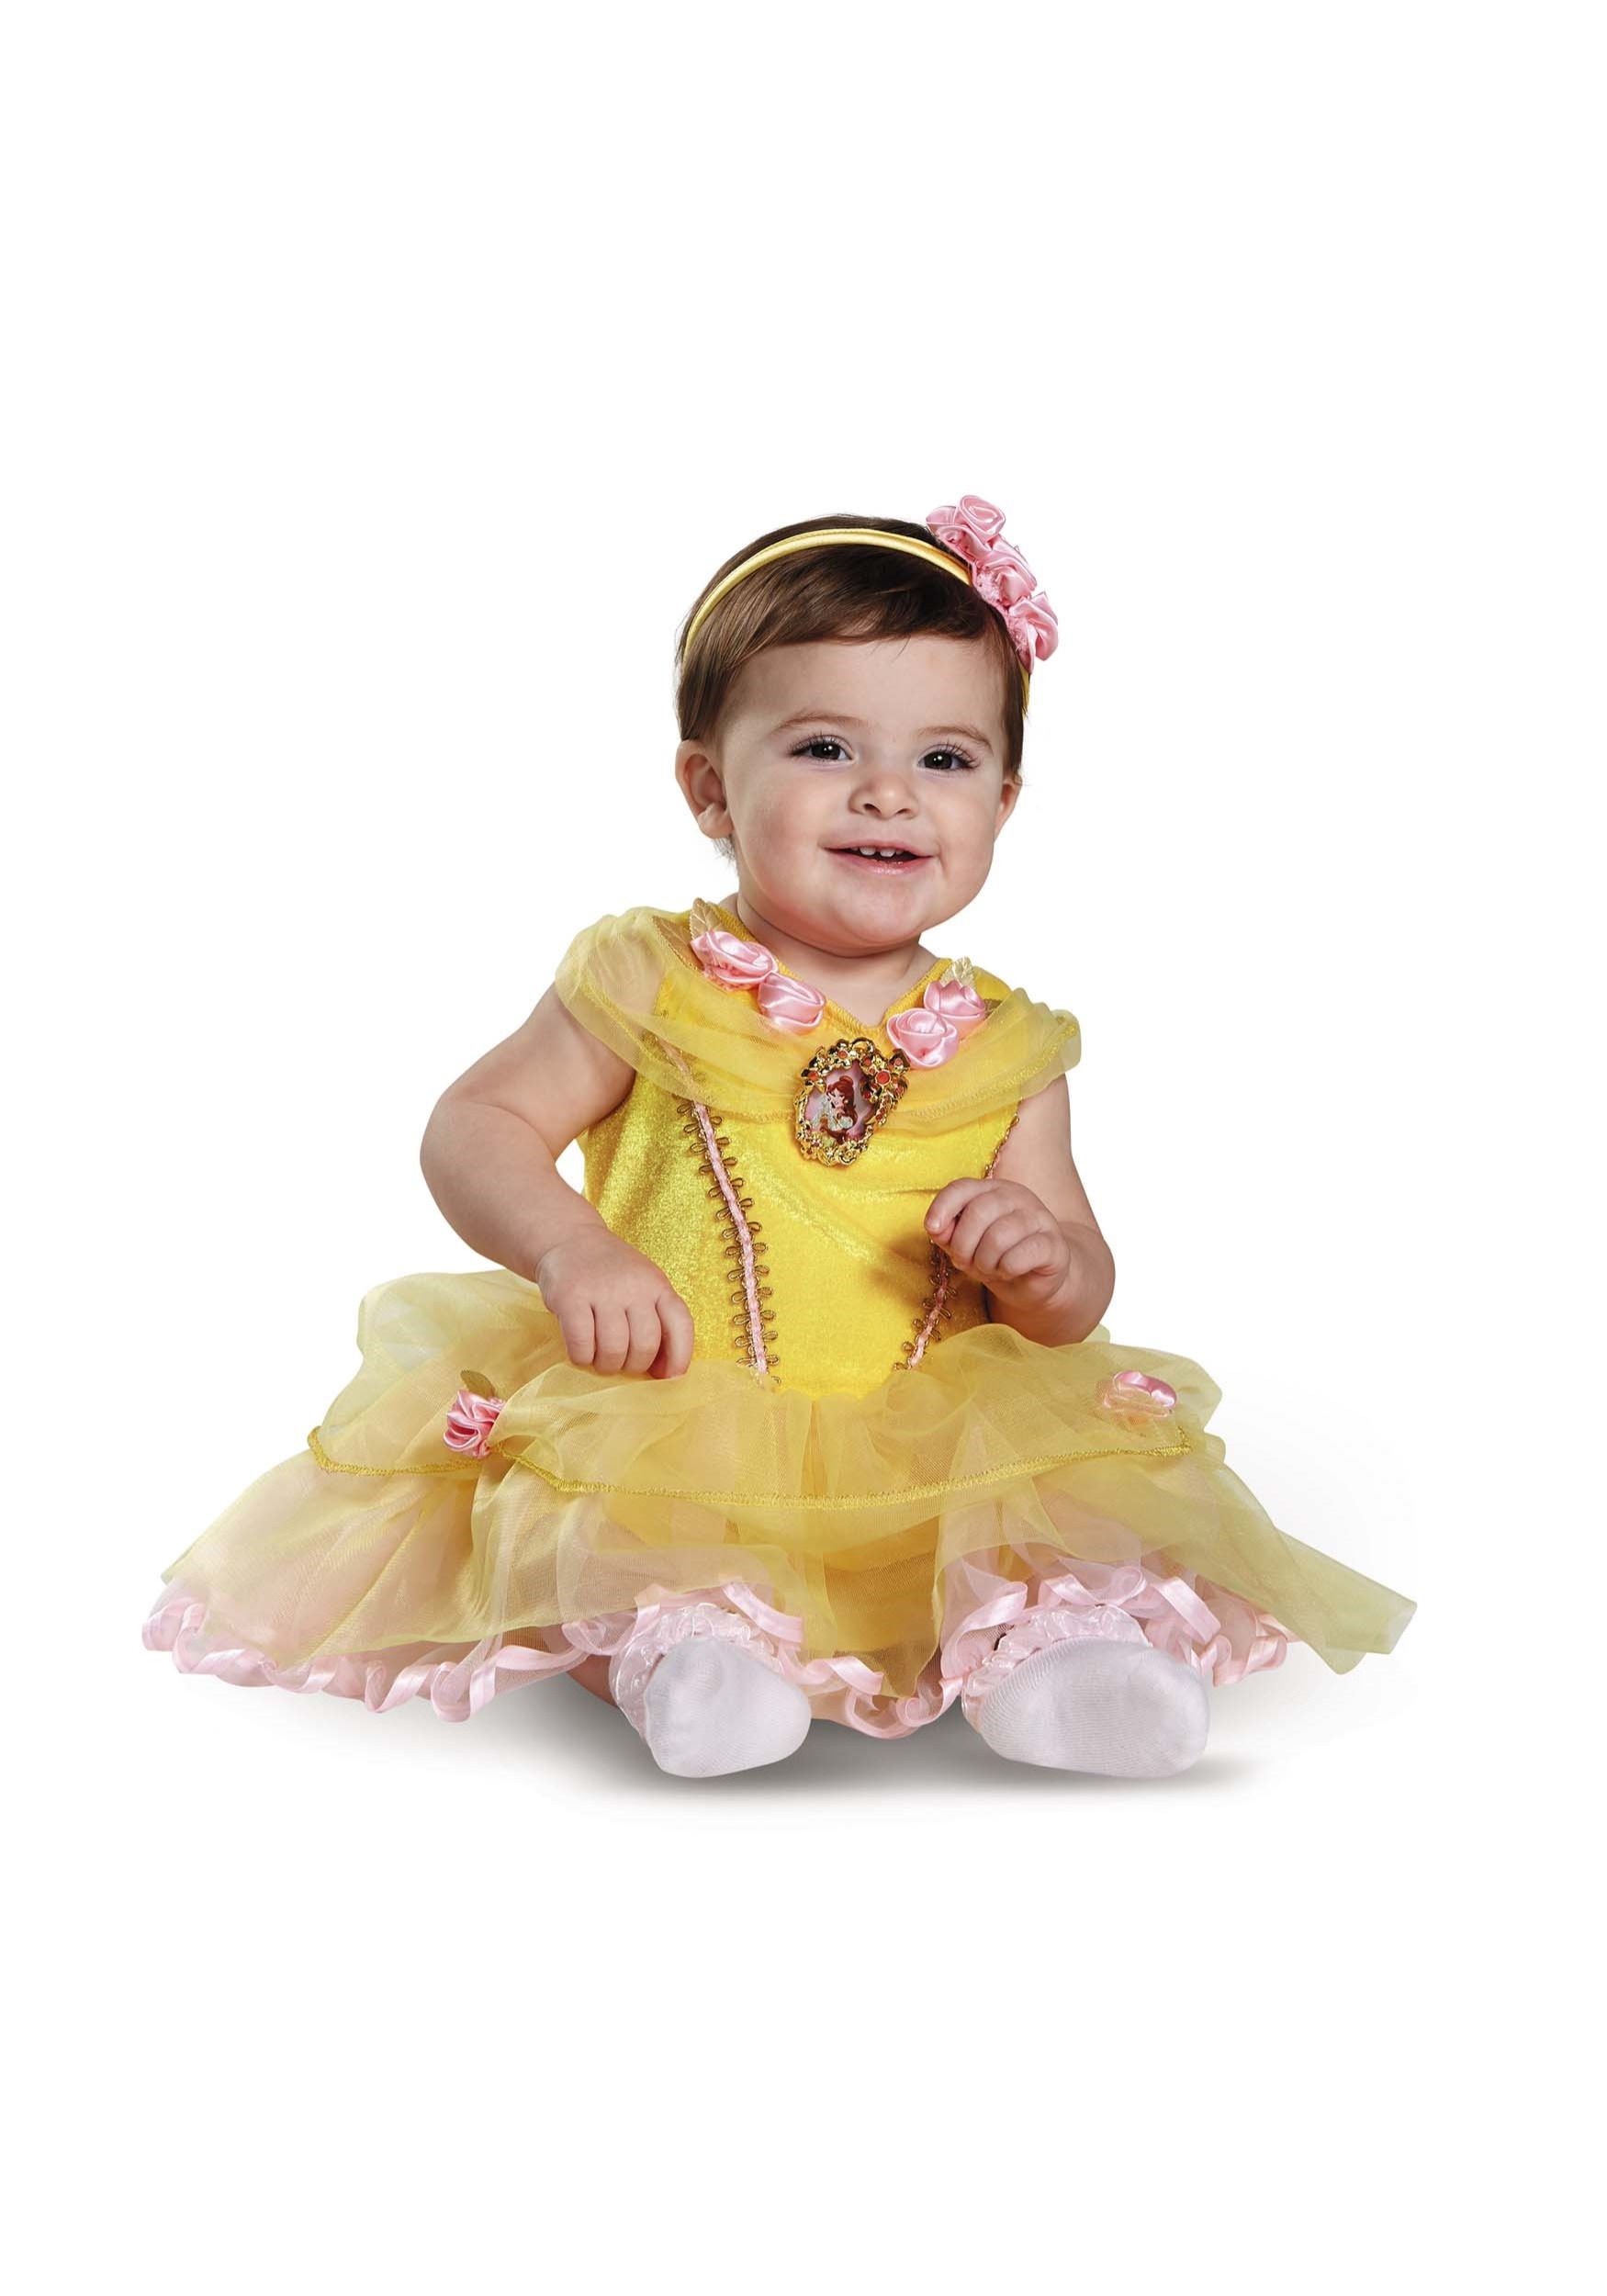 Belle Costume for Infants